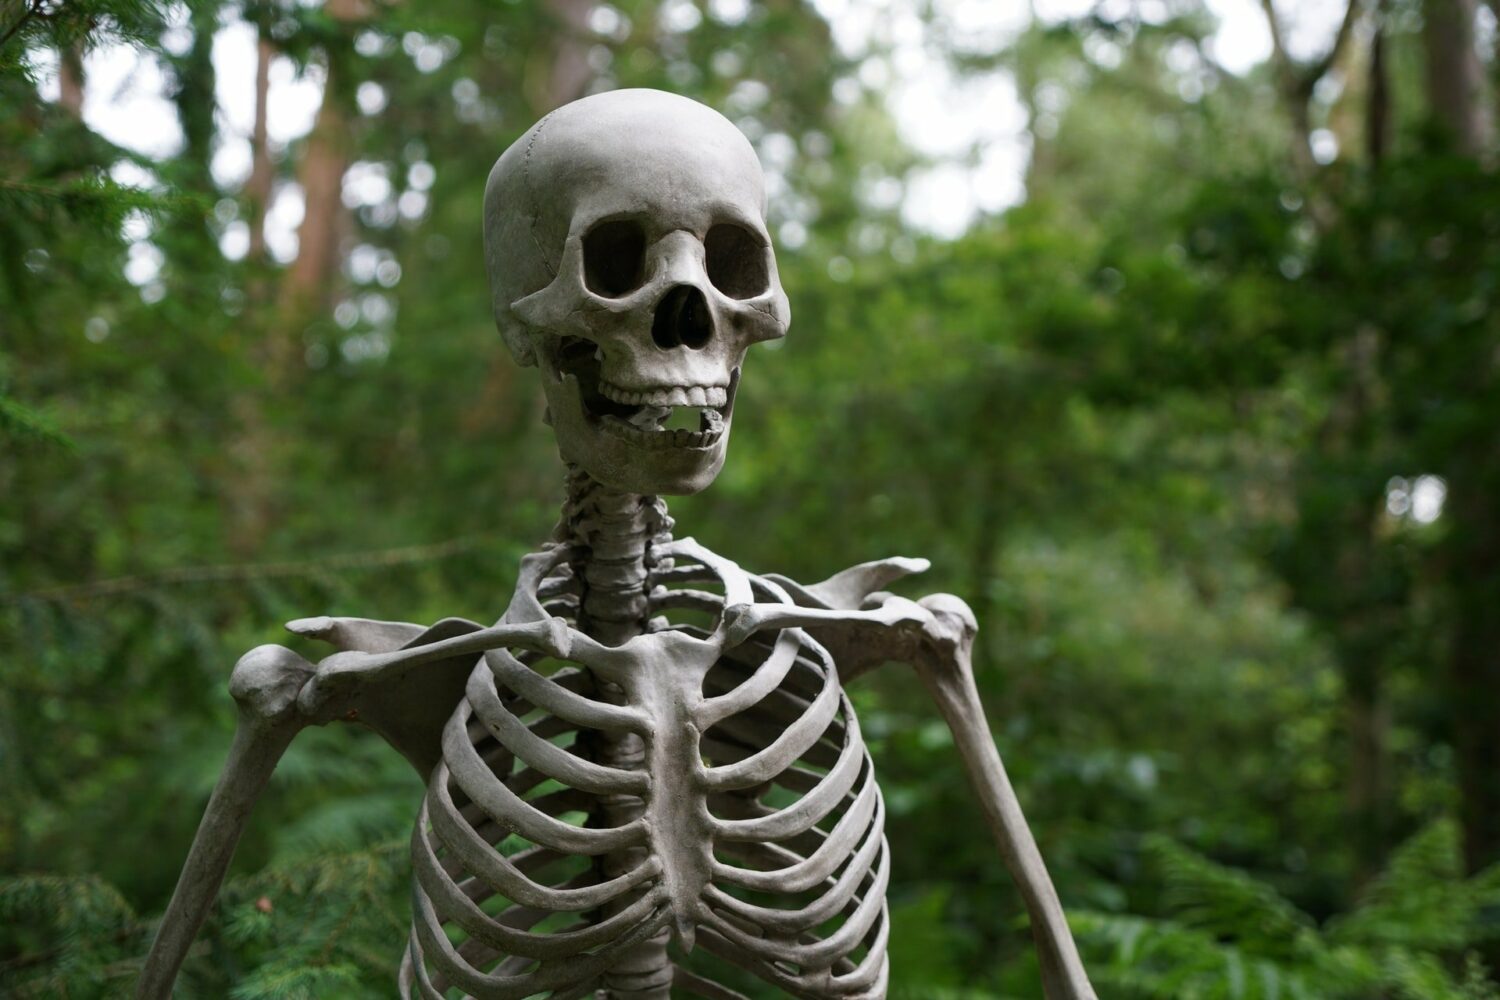 human skeleton anatomy